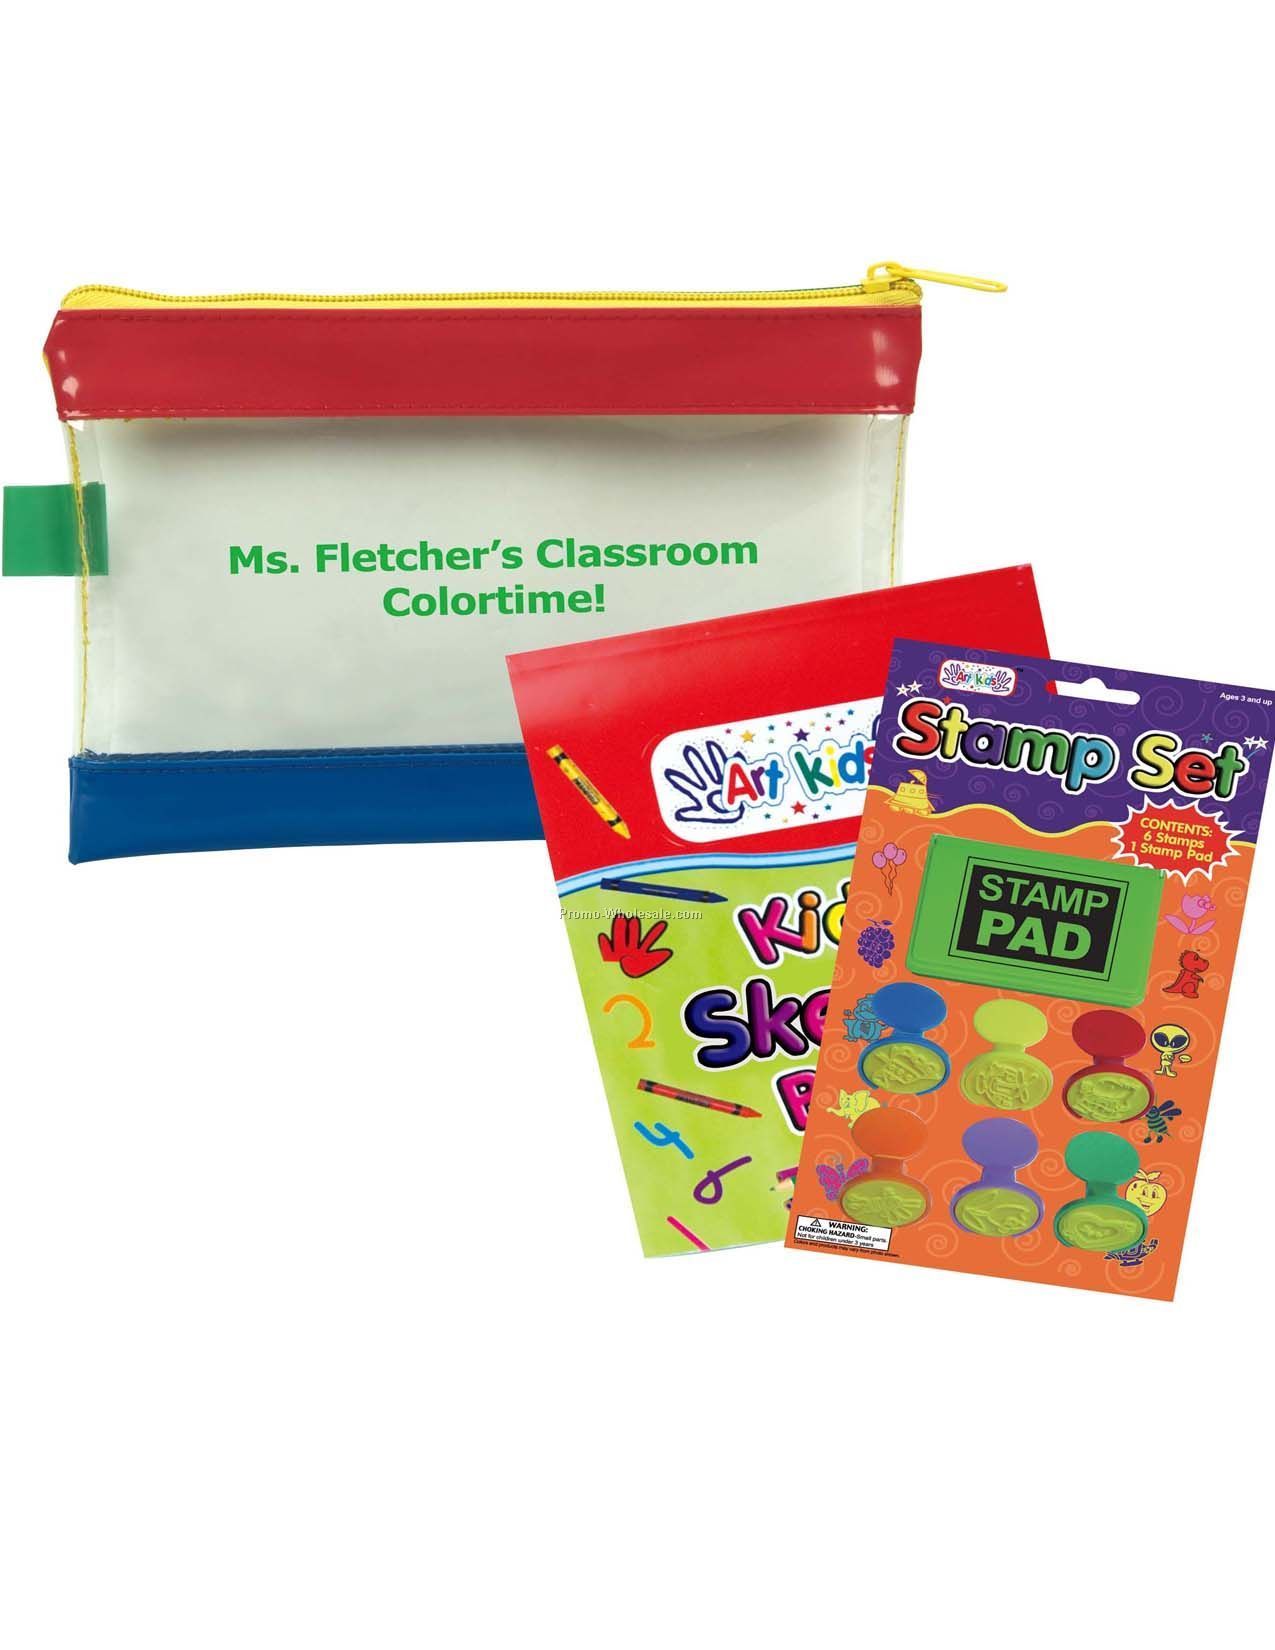 Kid's Stamp Pad Play Set*special*